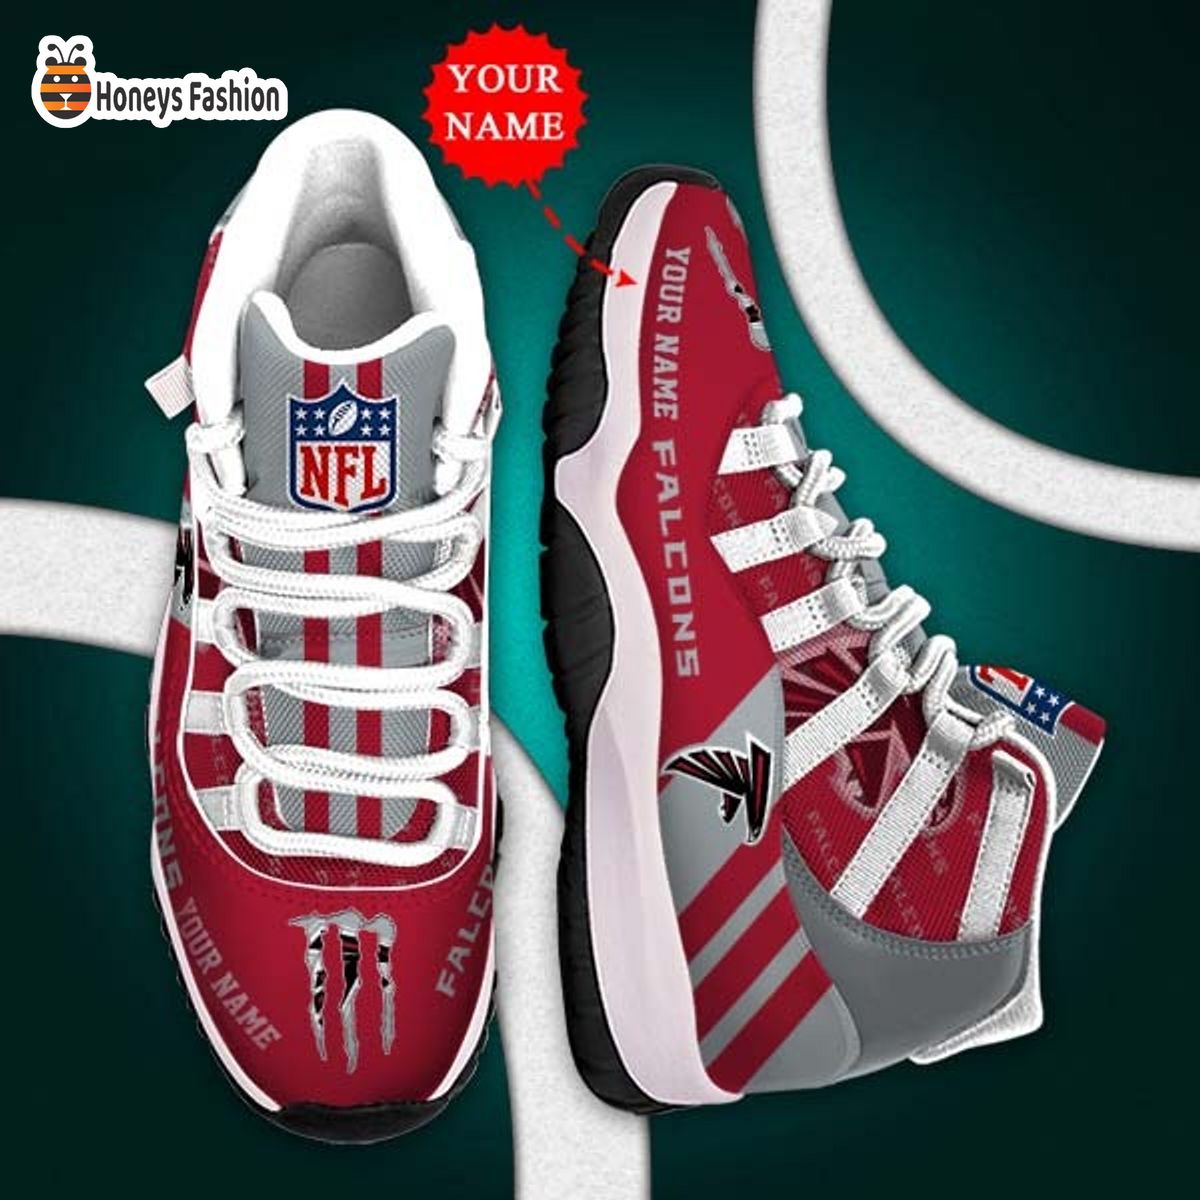 Atlanta Falcons NFL Adidas Personalized Air Jordan 11 Shoes